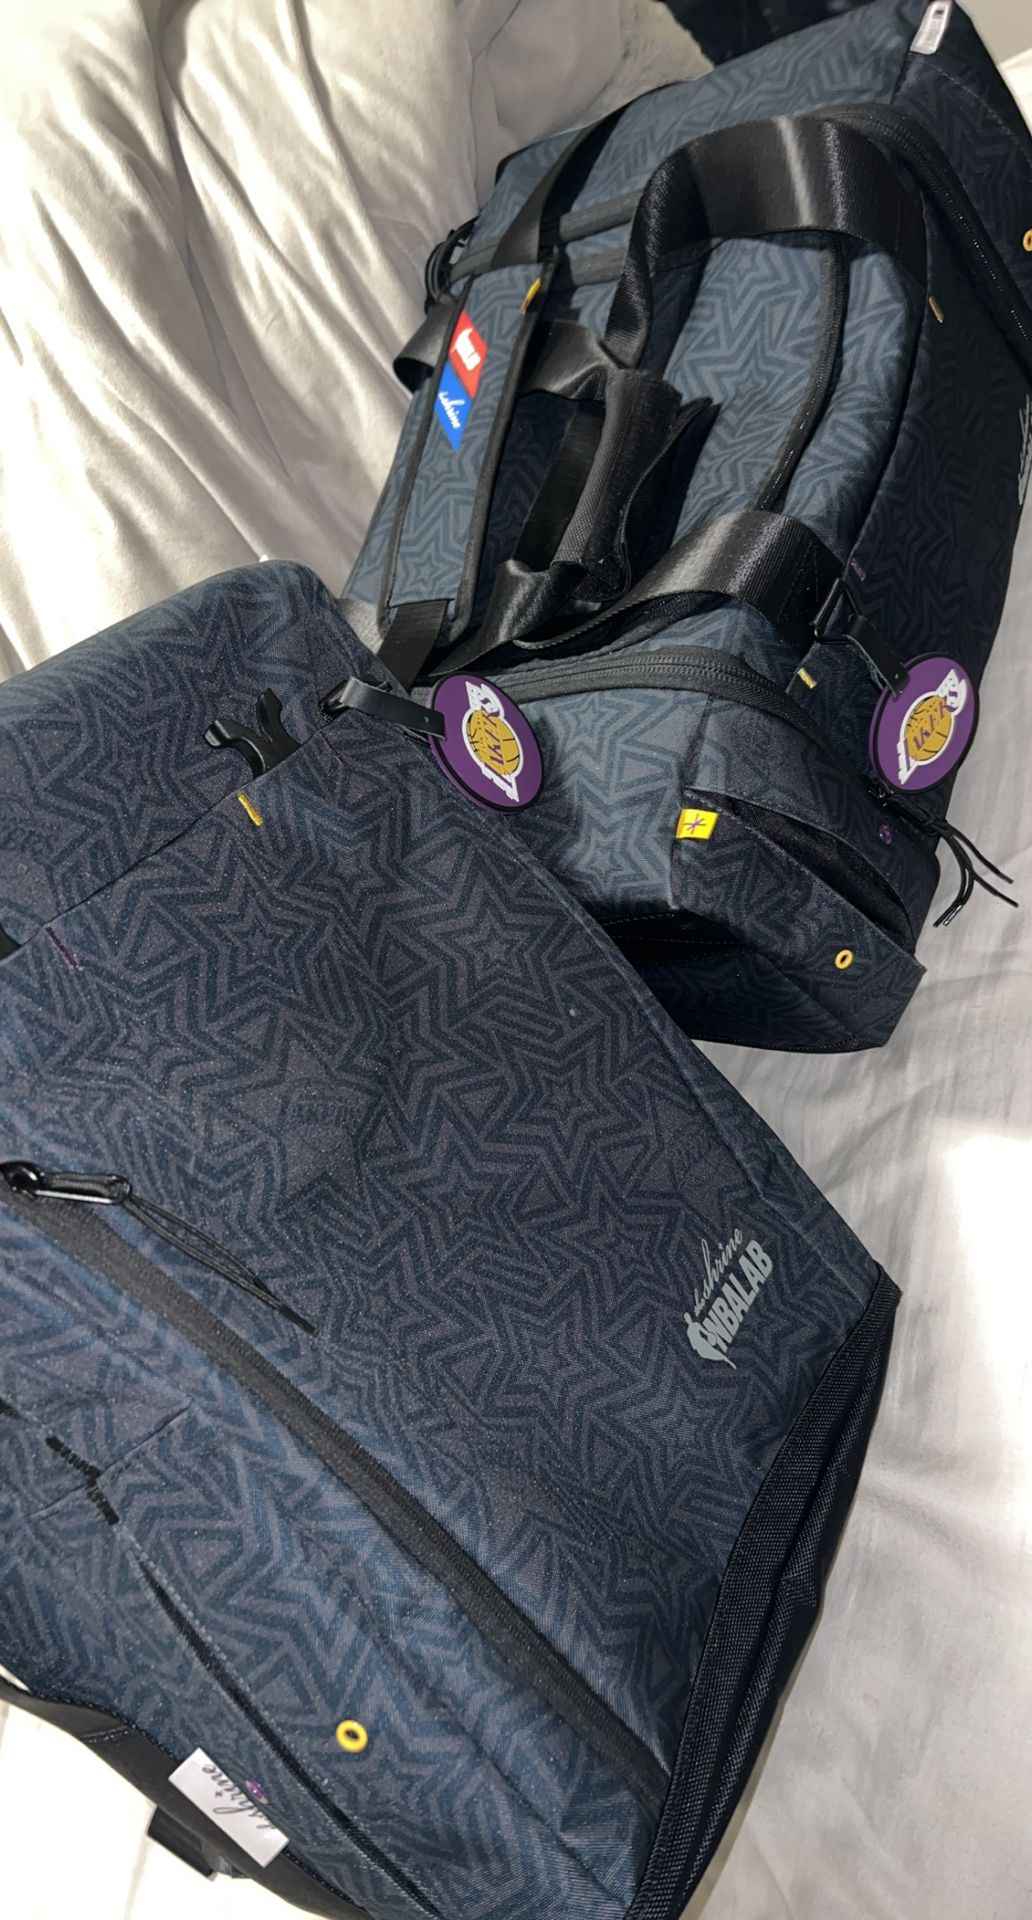 NBA LAB x The Shrine Co Lakers Travel Backpack & Duffle Bag Combo